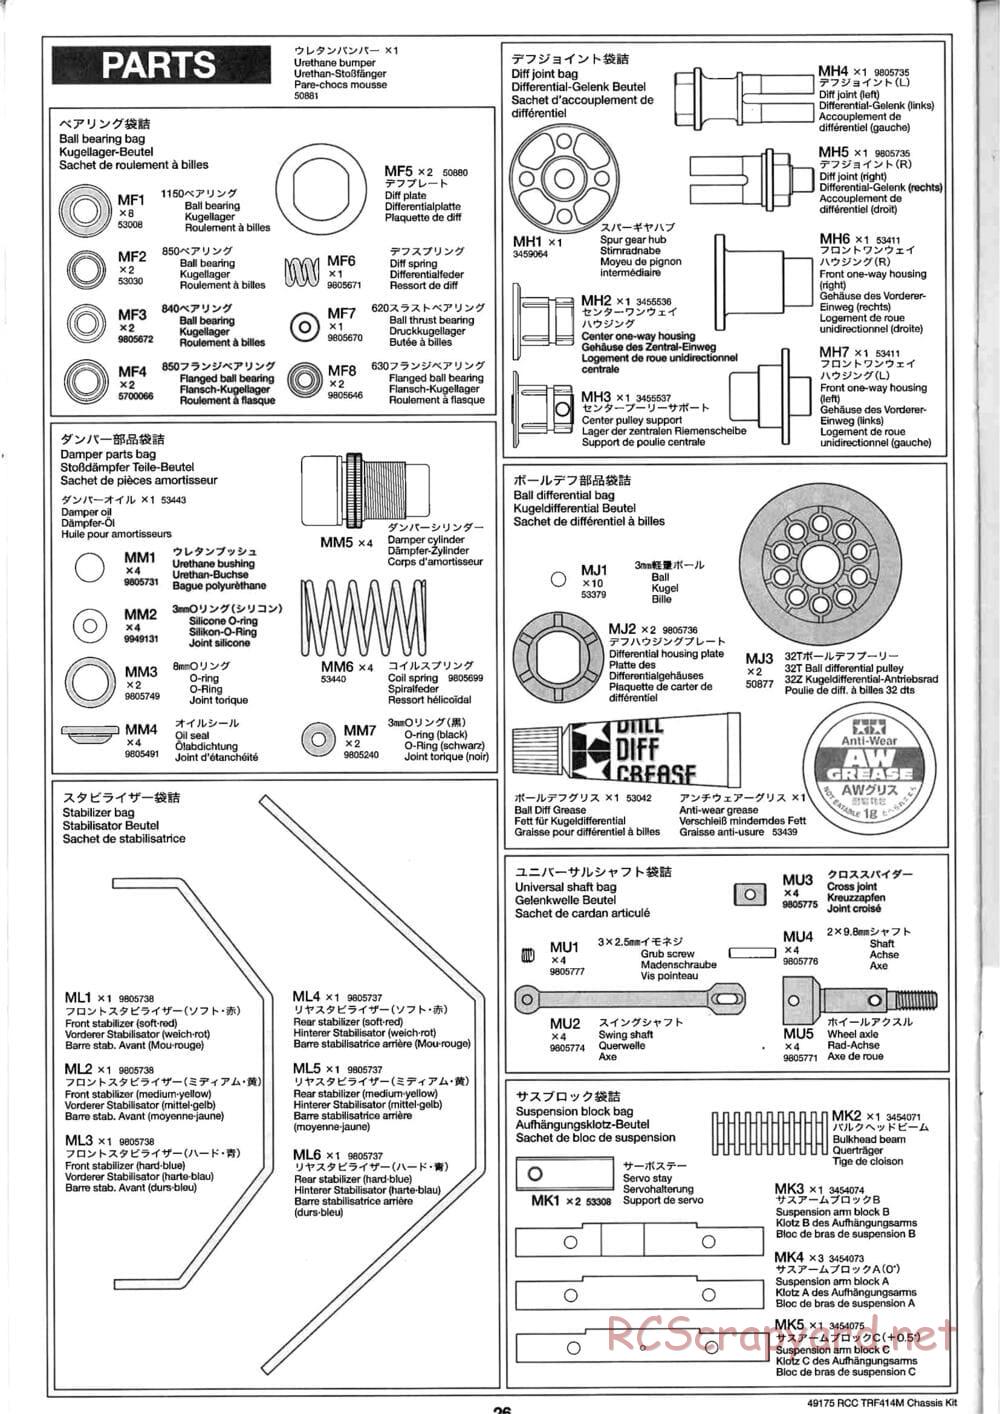 Tamiya - TRF414M Chassis - Manual - Page 26